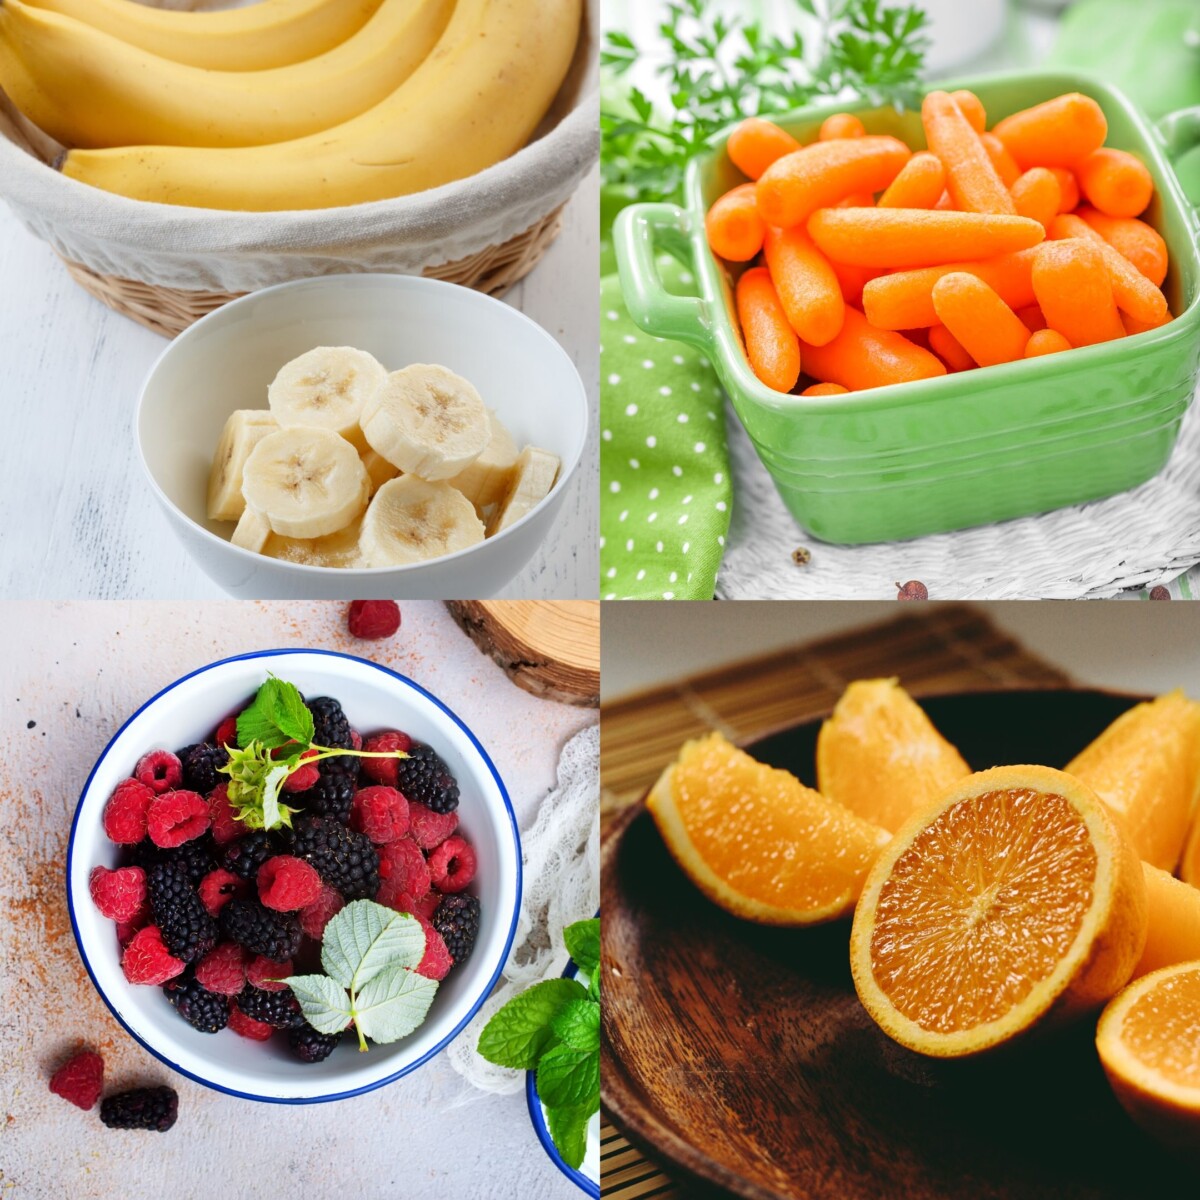 bananas, carrots, berries and oranges